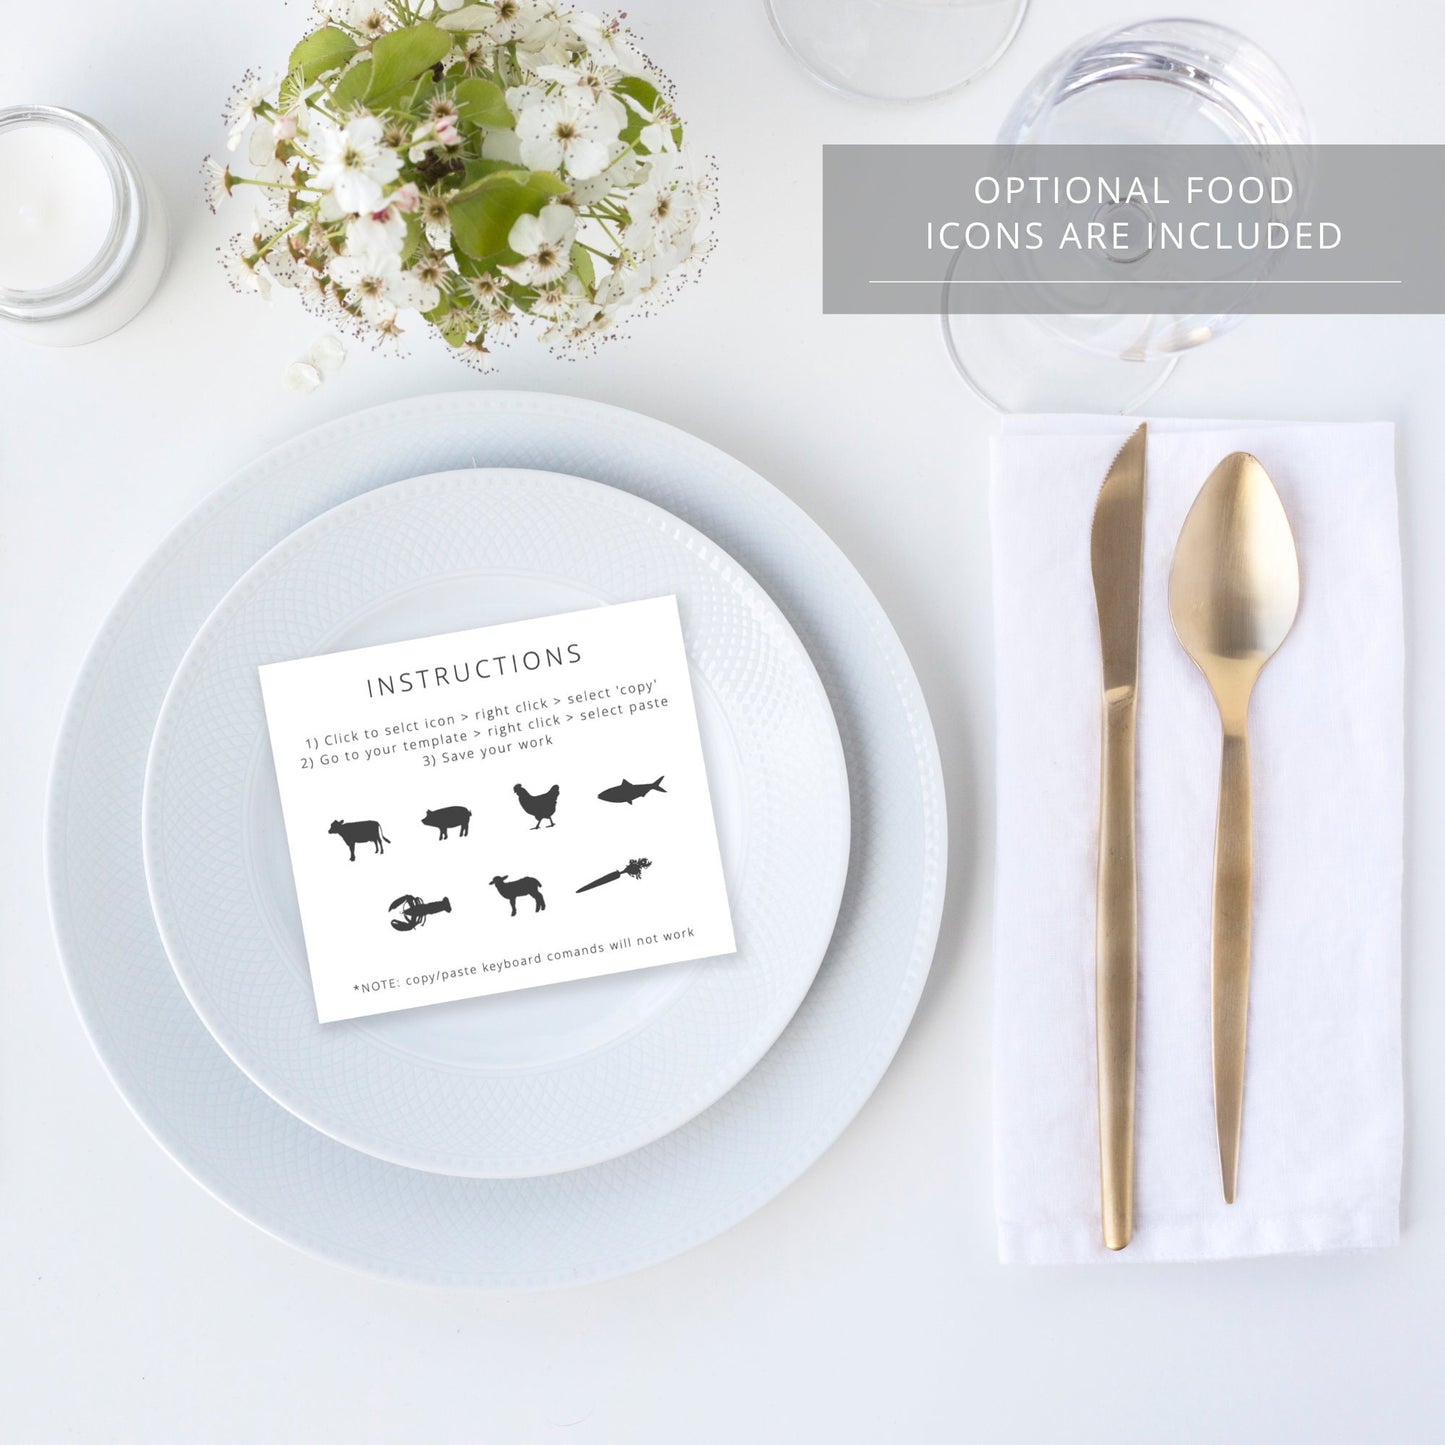 Editable  Greenery and Gold Wedding Place Card Eucalyptus Wedding Name Card Escort Card Template